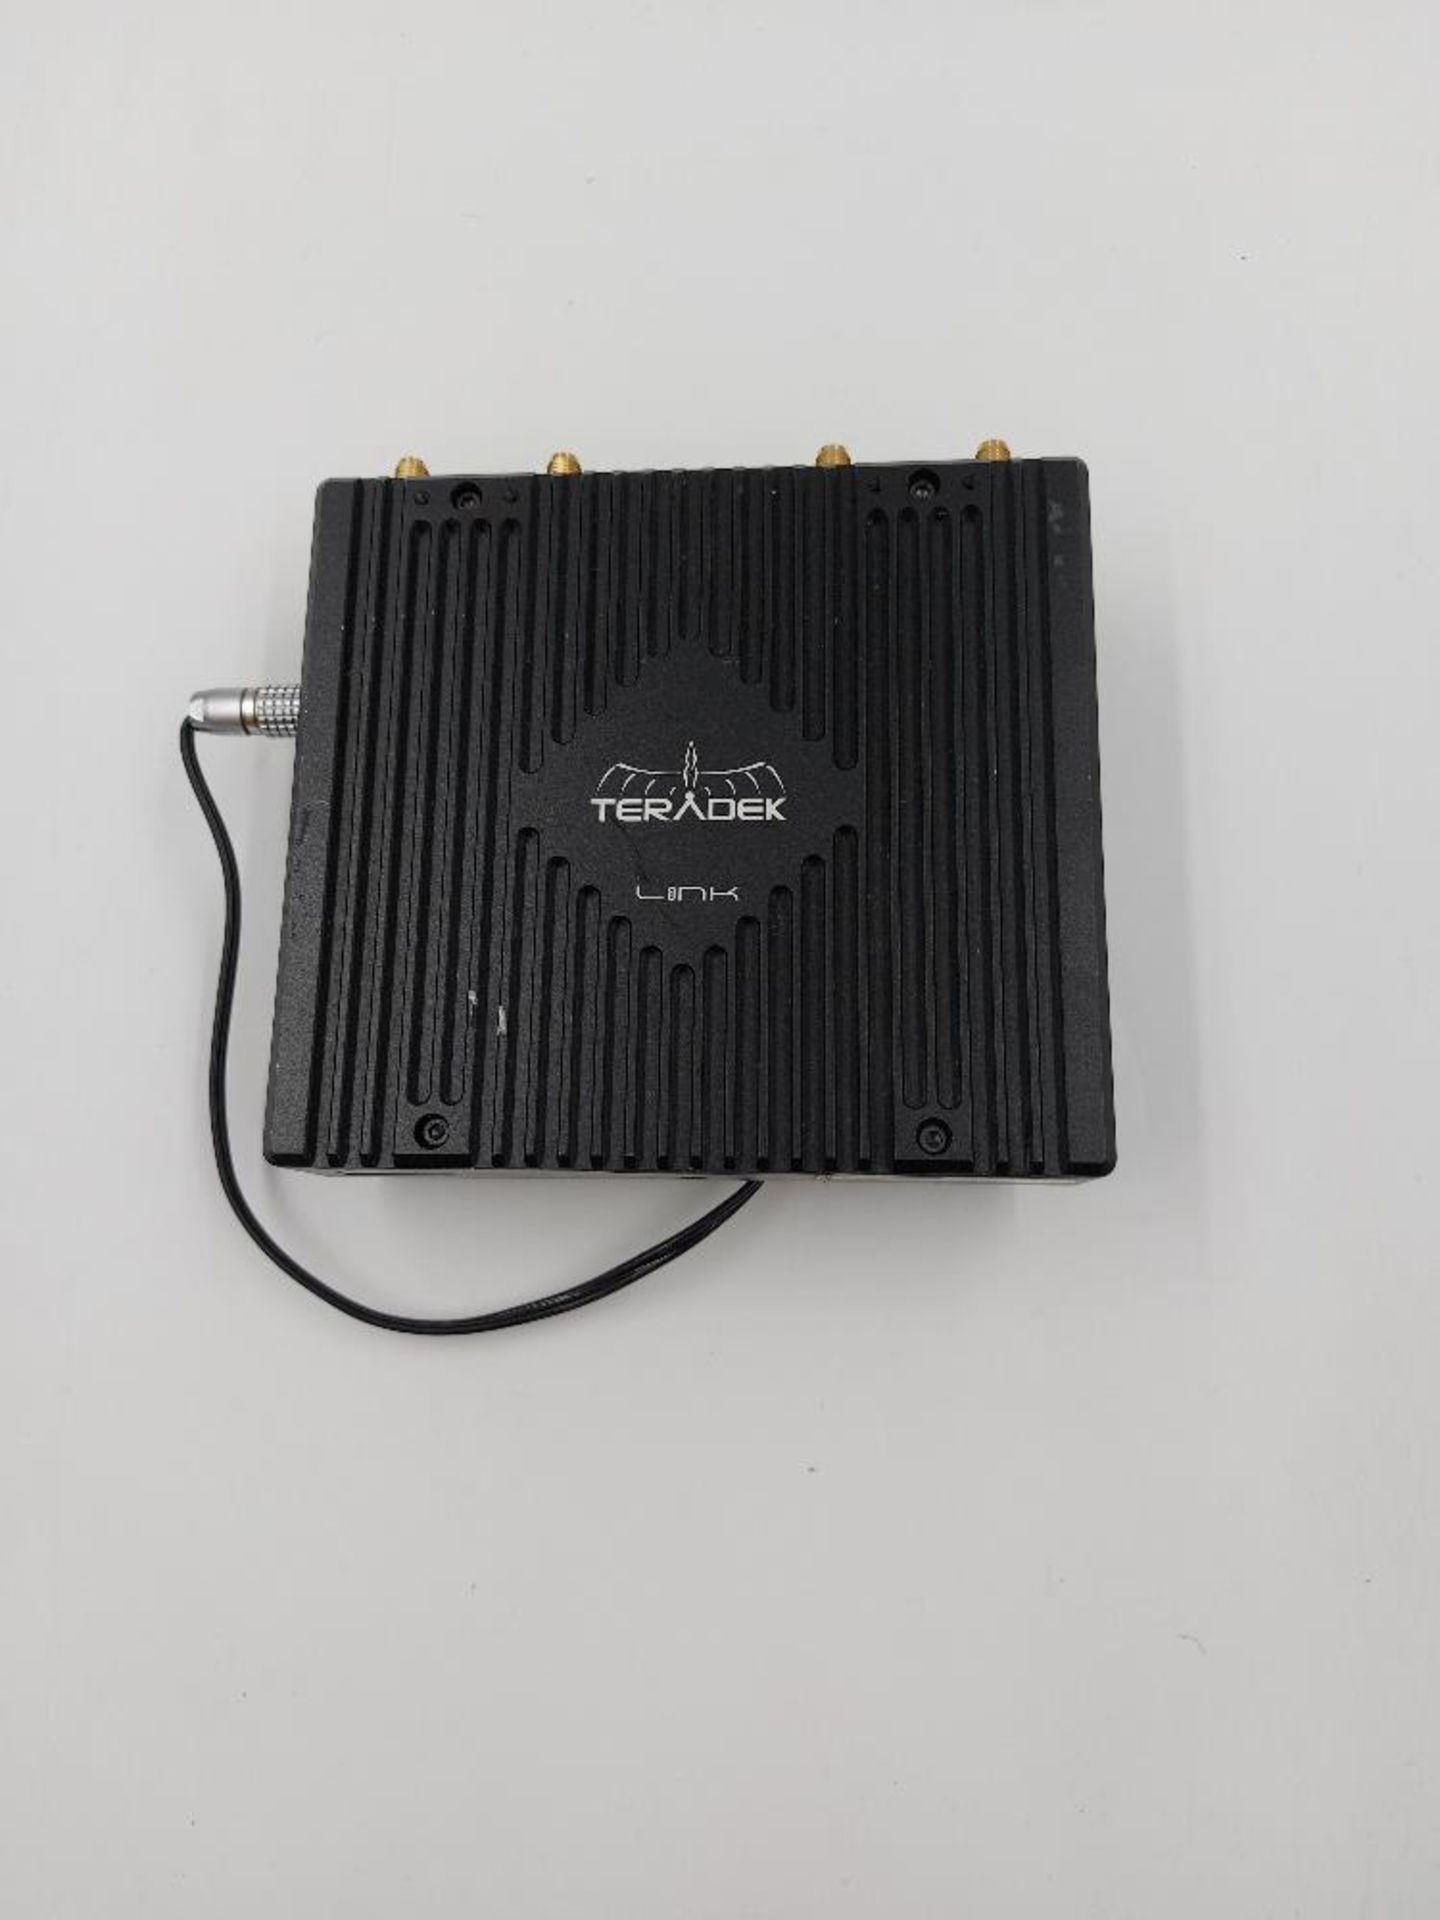 Teradek Link Dual Band Wi-Fi Router Kit - Image 2 of 4